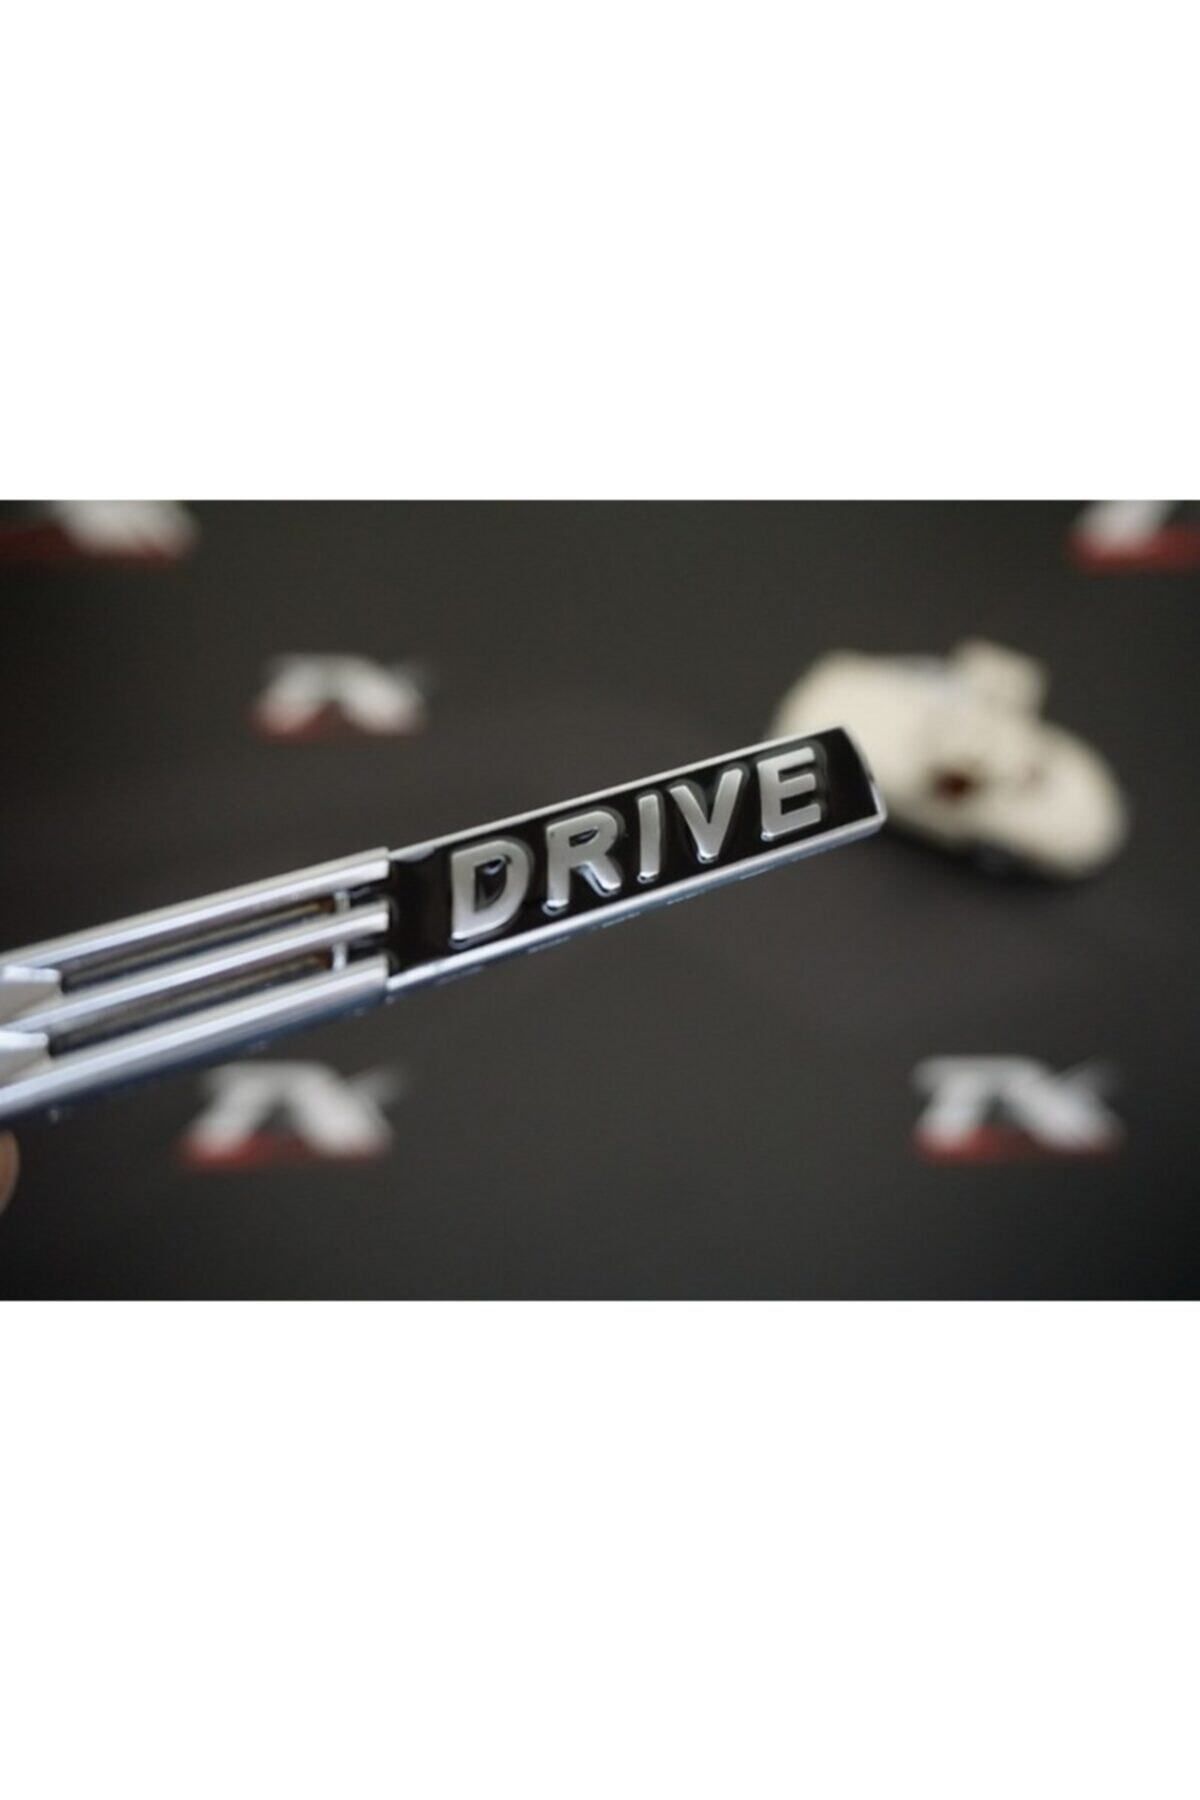 Mercedes Dk Tuning Dk E Drive Krom Metal Bagaj Logo 3m 3d Bmw Ile Uyumlu